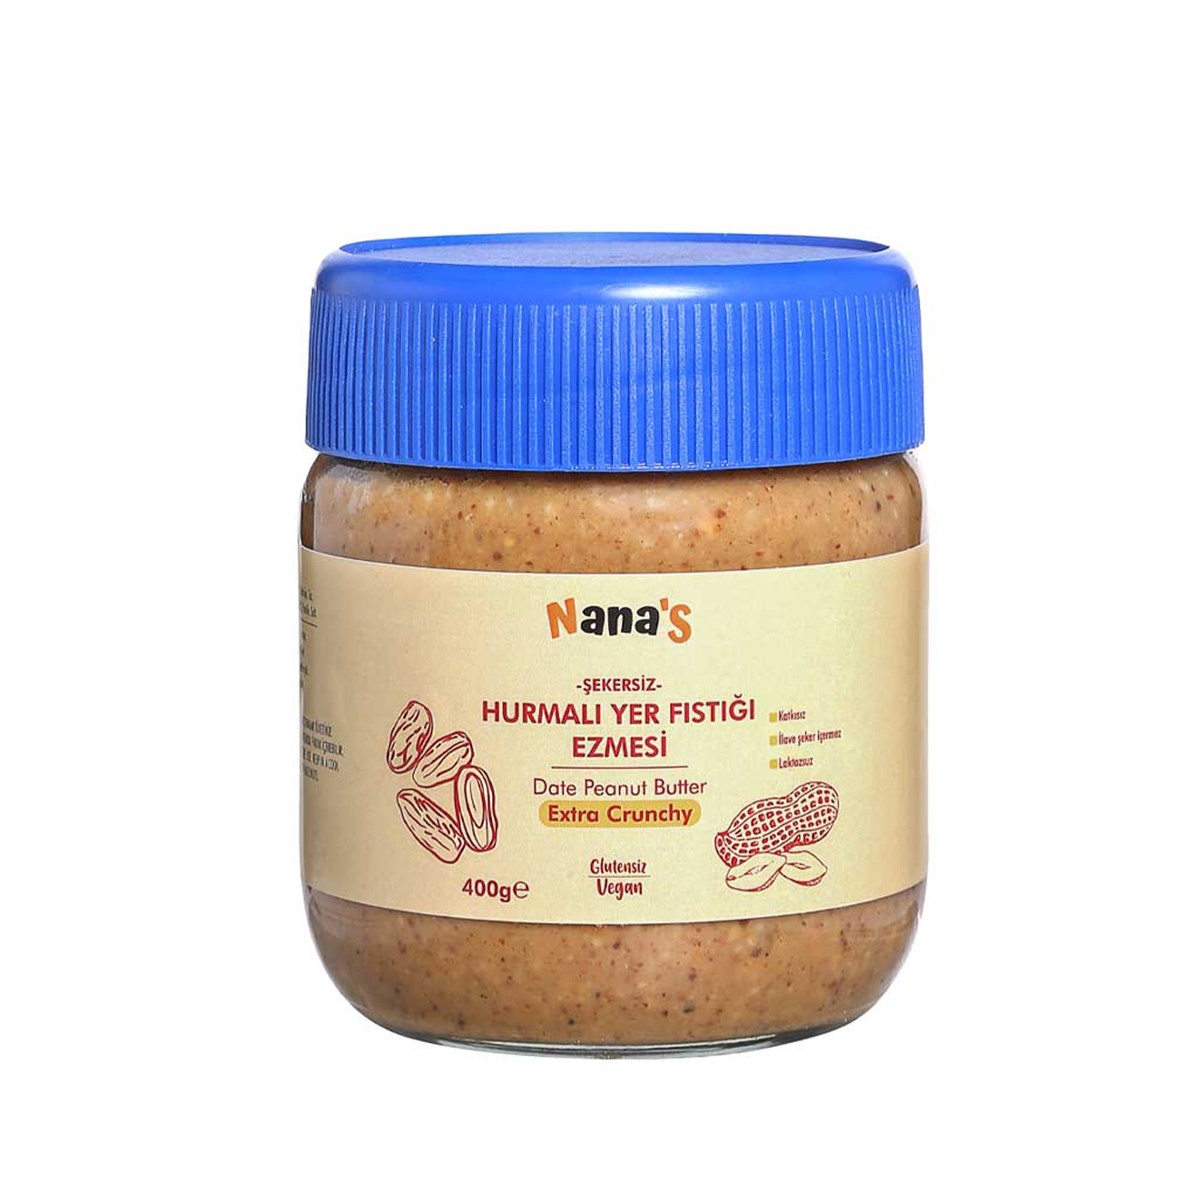 Nana'S Hurmalı Yer Fıstığı Ezmesi (Extra Crunchy) 400 g | Nana'S